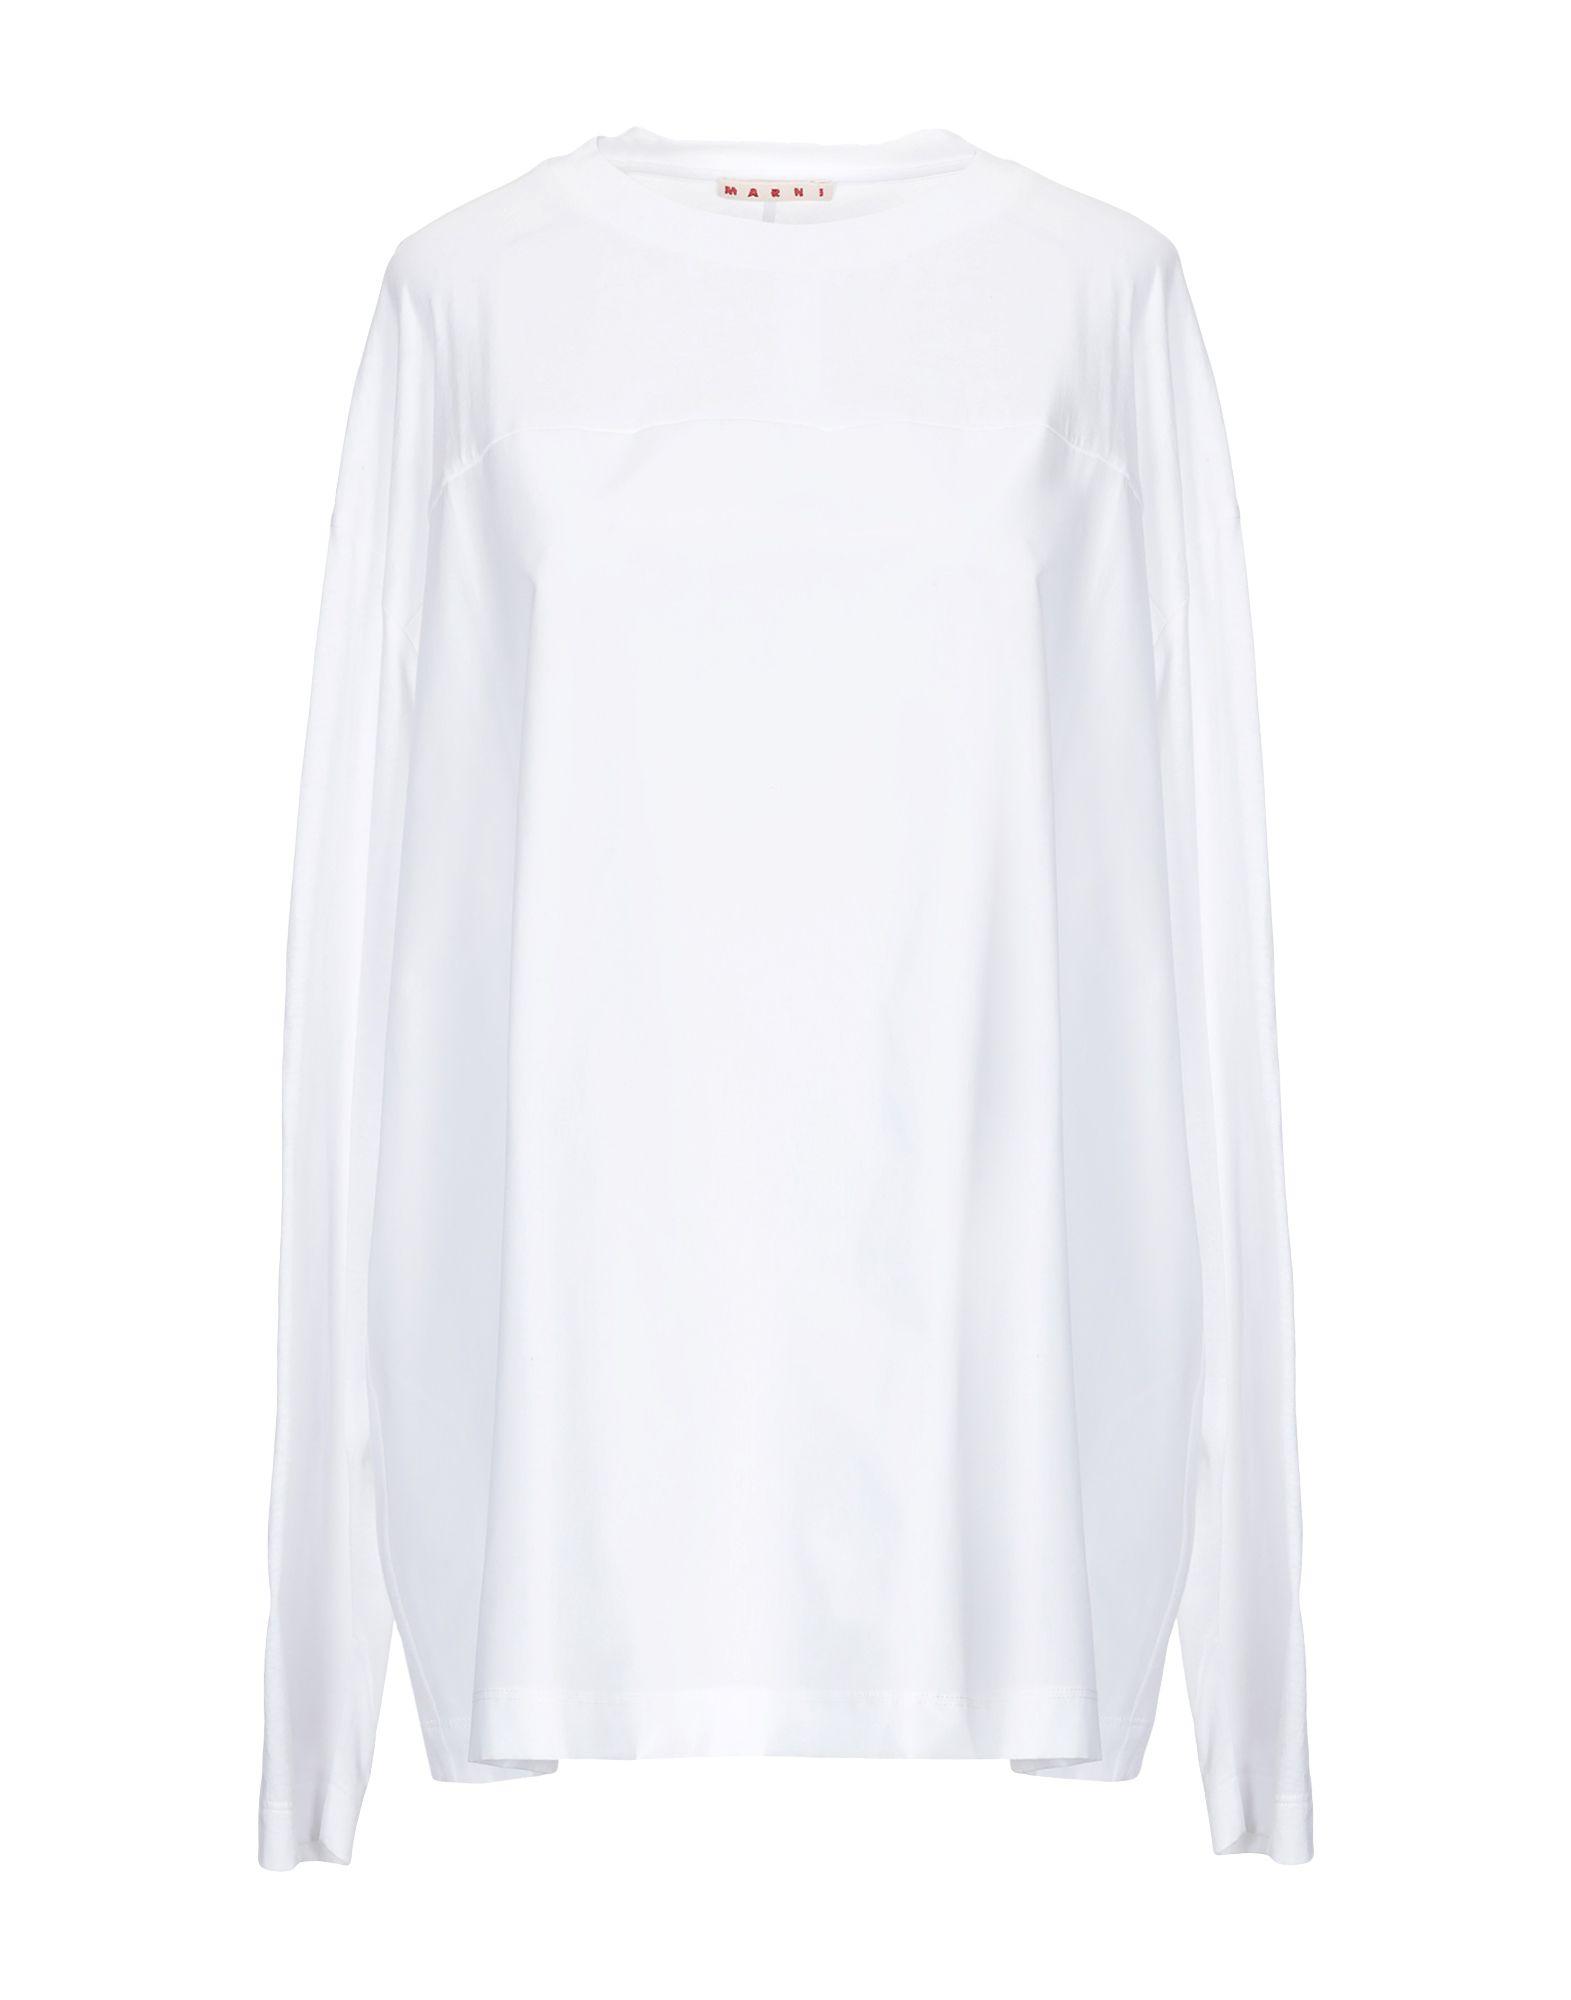 Marni T-shirt in White - Lyst